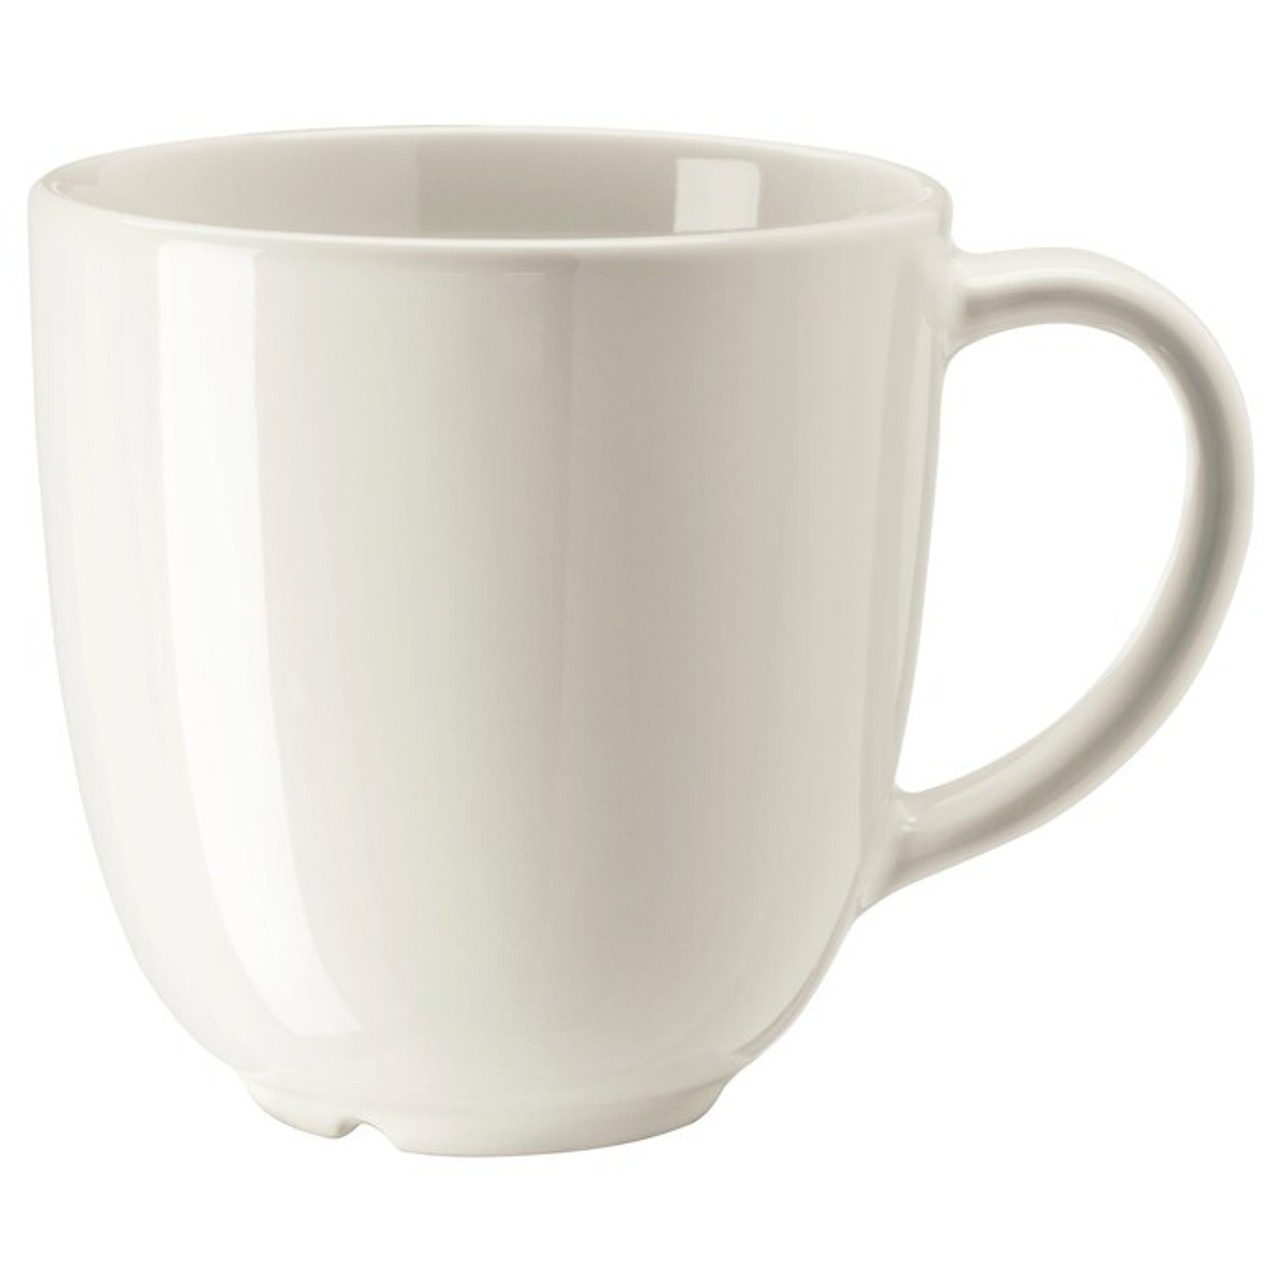 VÄRDERA Mug, white - IKEA